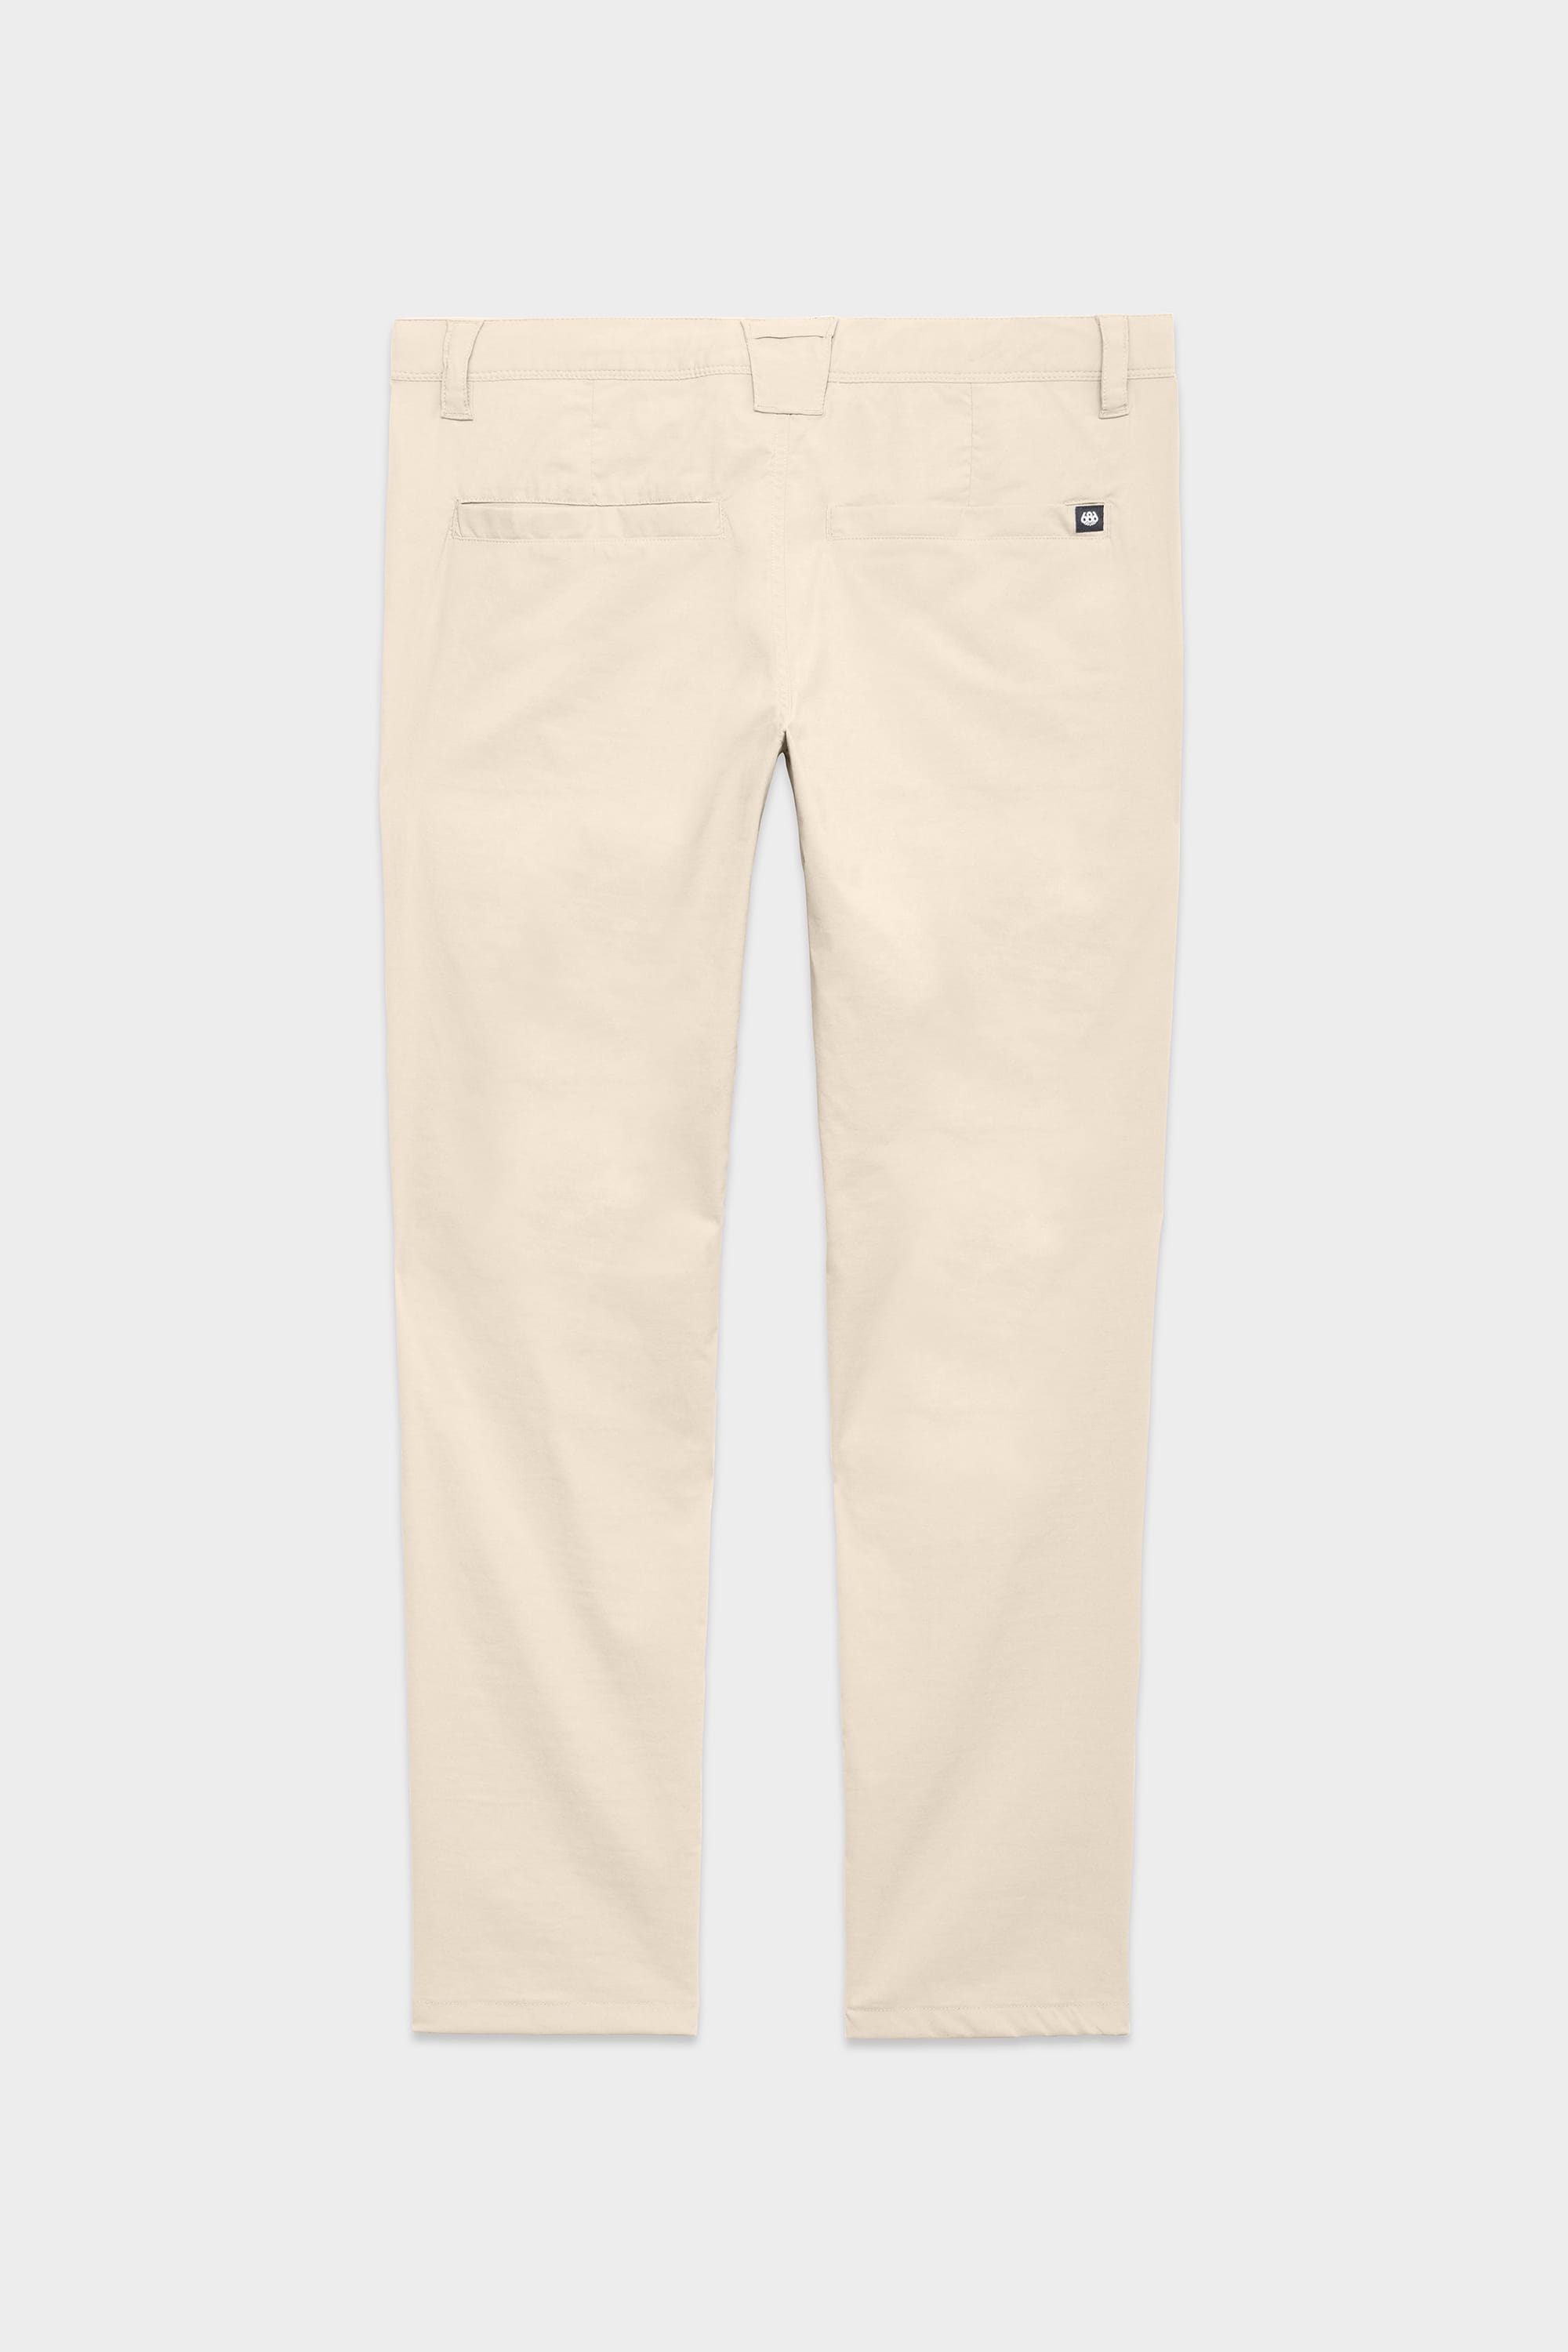 2 Button Extra Long Square Closure Drab Khaki Chino Pants – Luxire